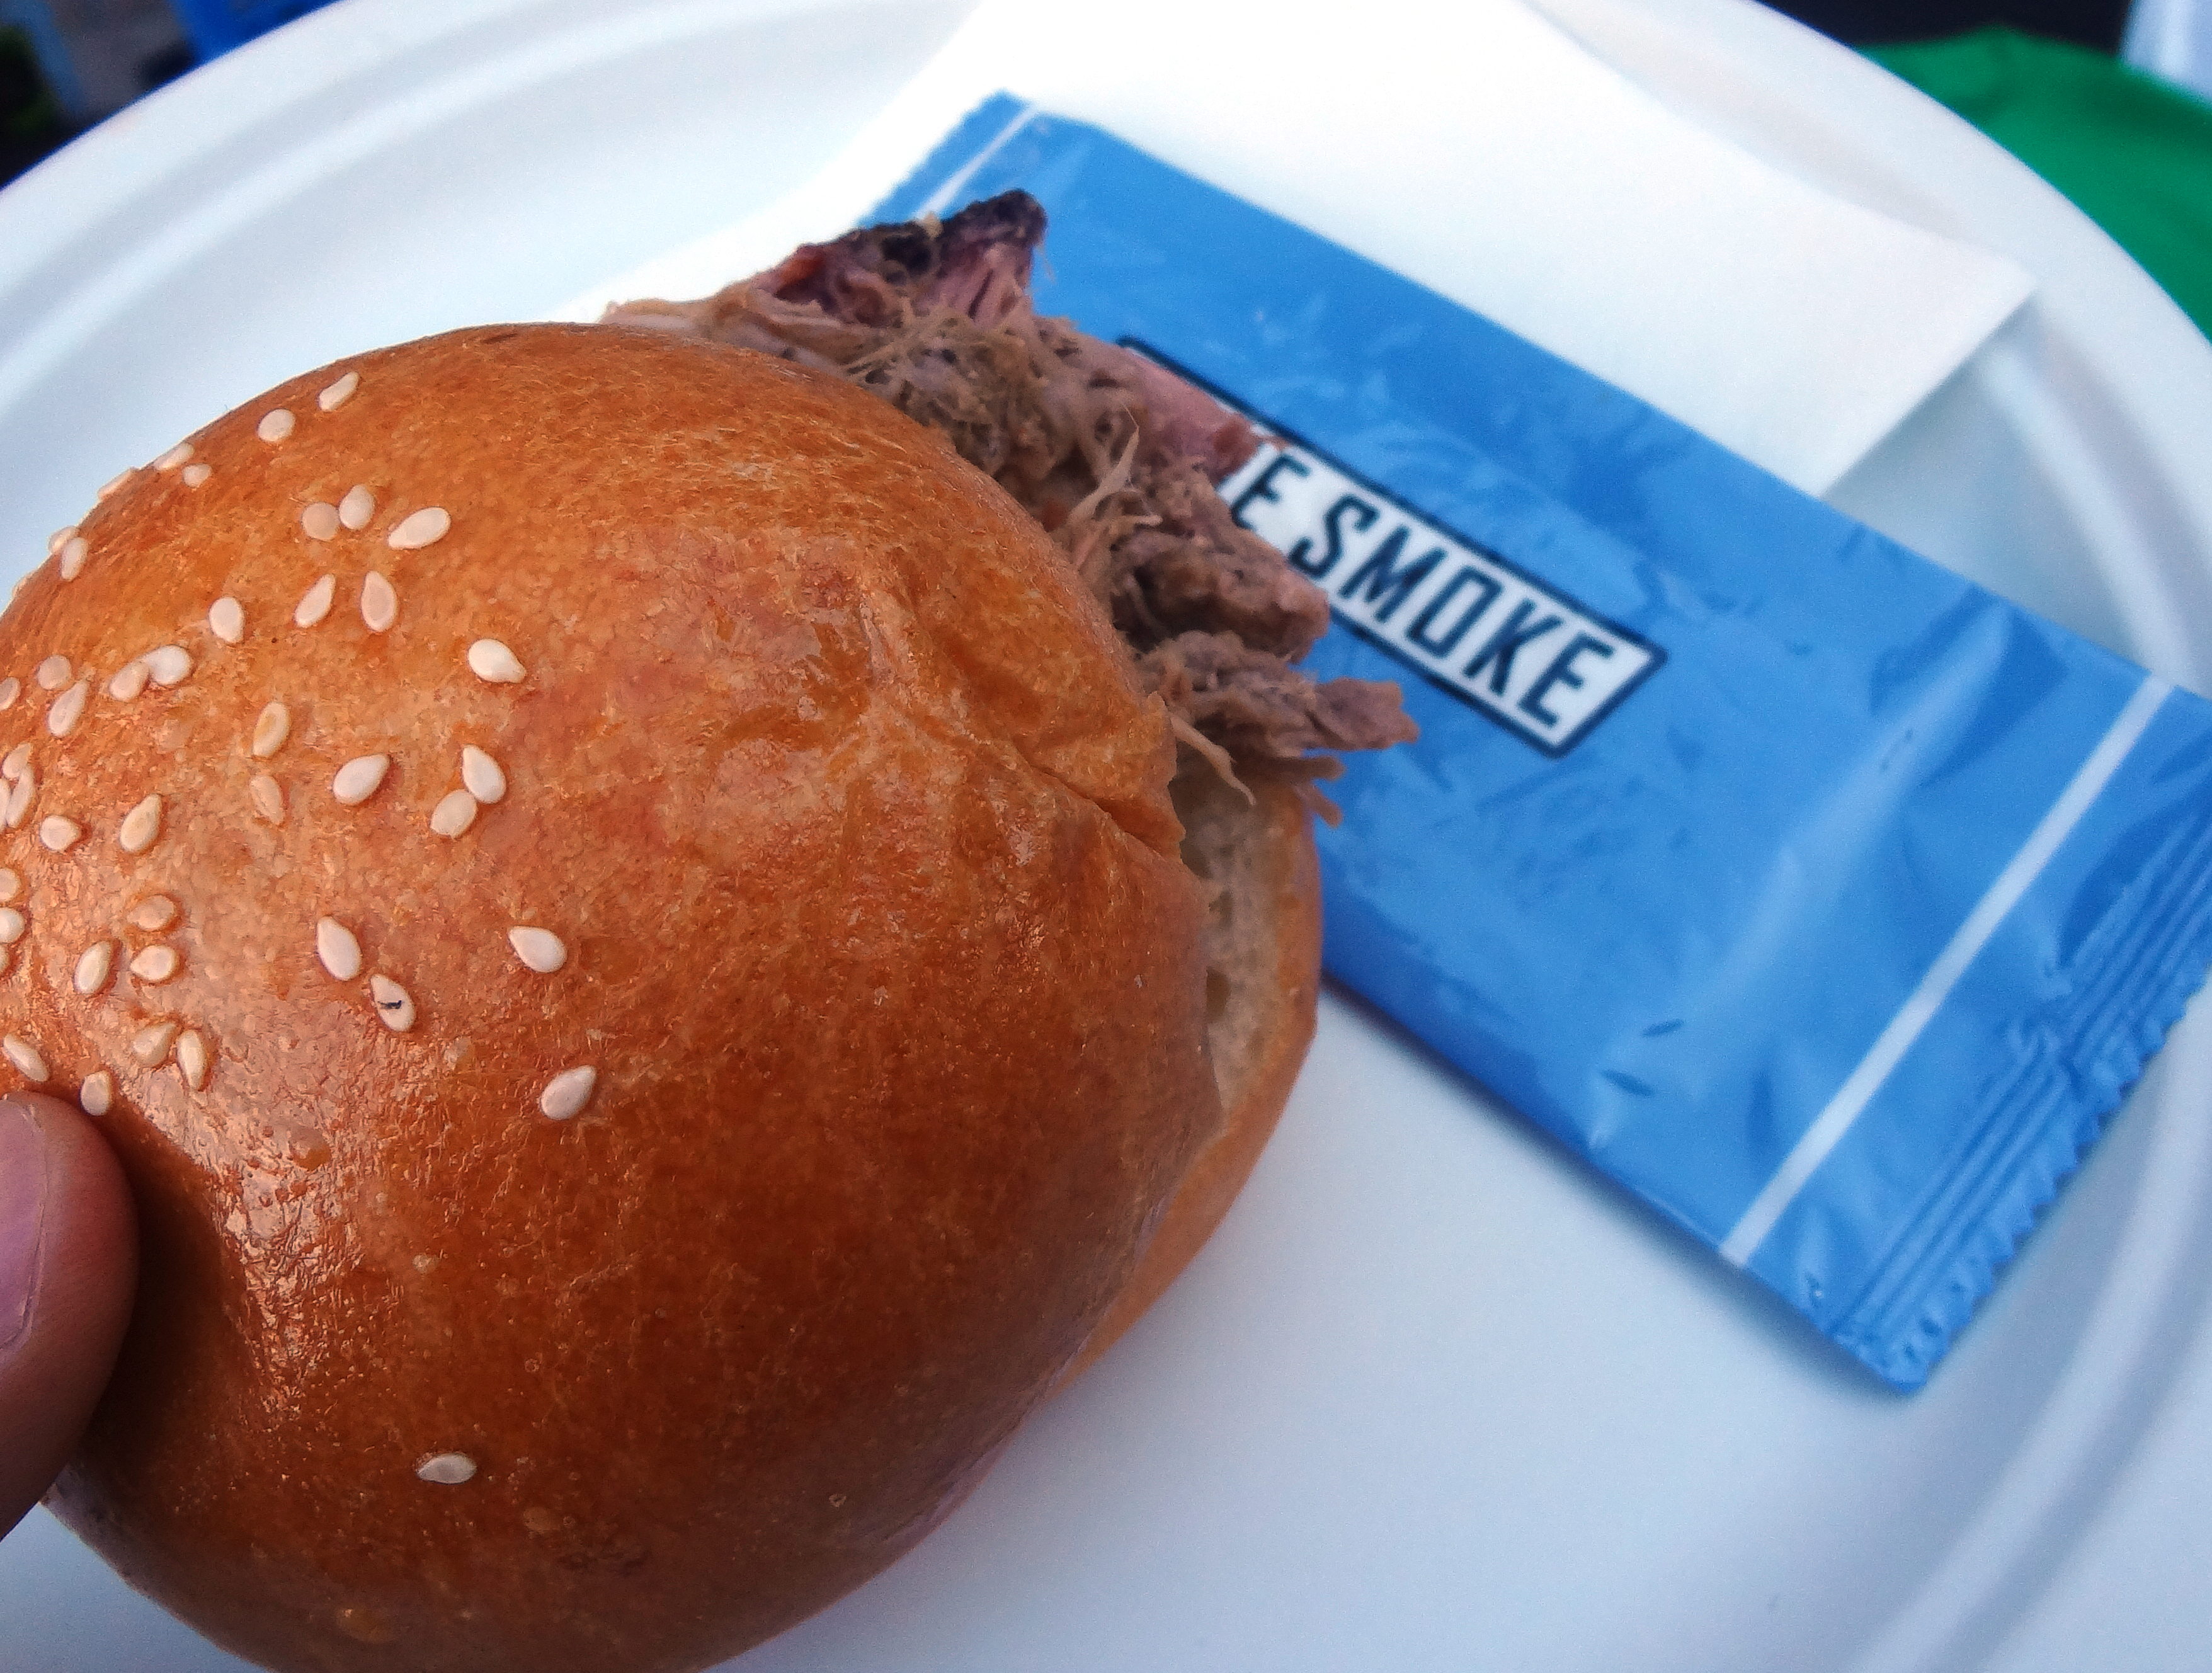 Blue Smoke pork sandwich